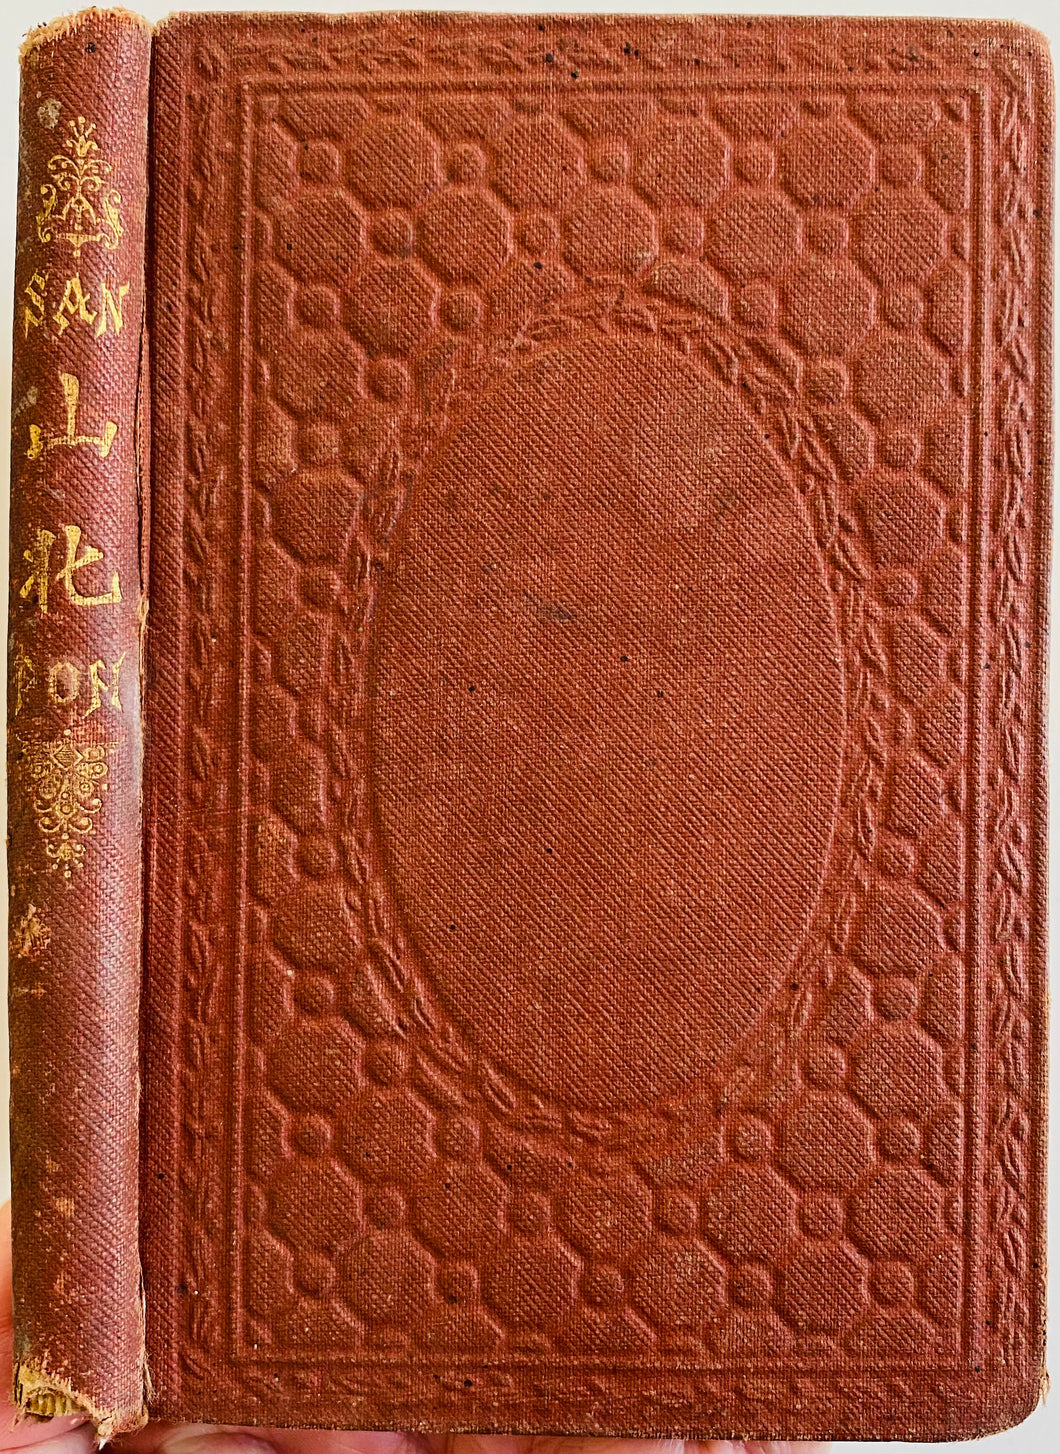 1869 JOHN L NEVIUS. Rare Narrative of Missionary Work in Outstation of China. Ningo.